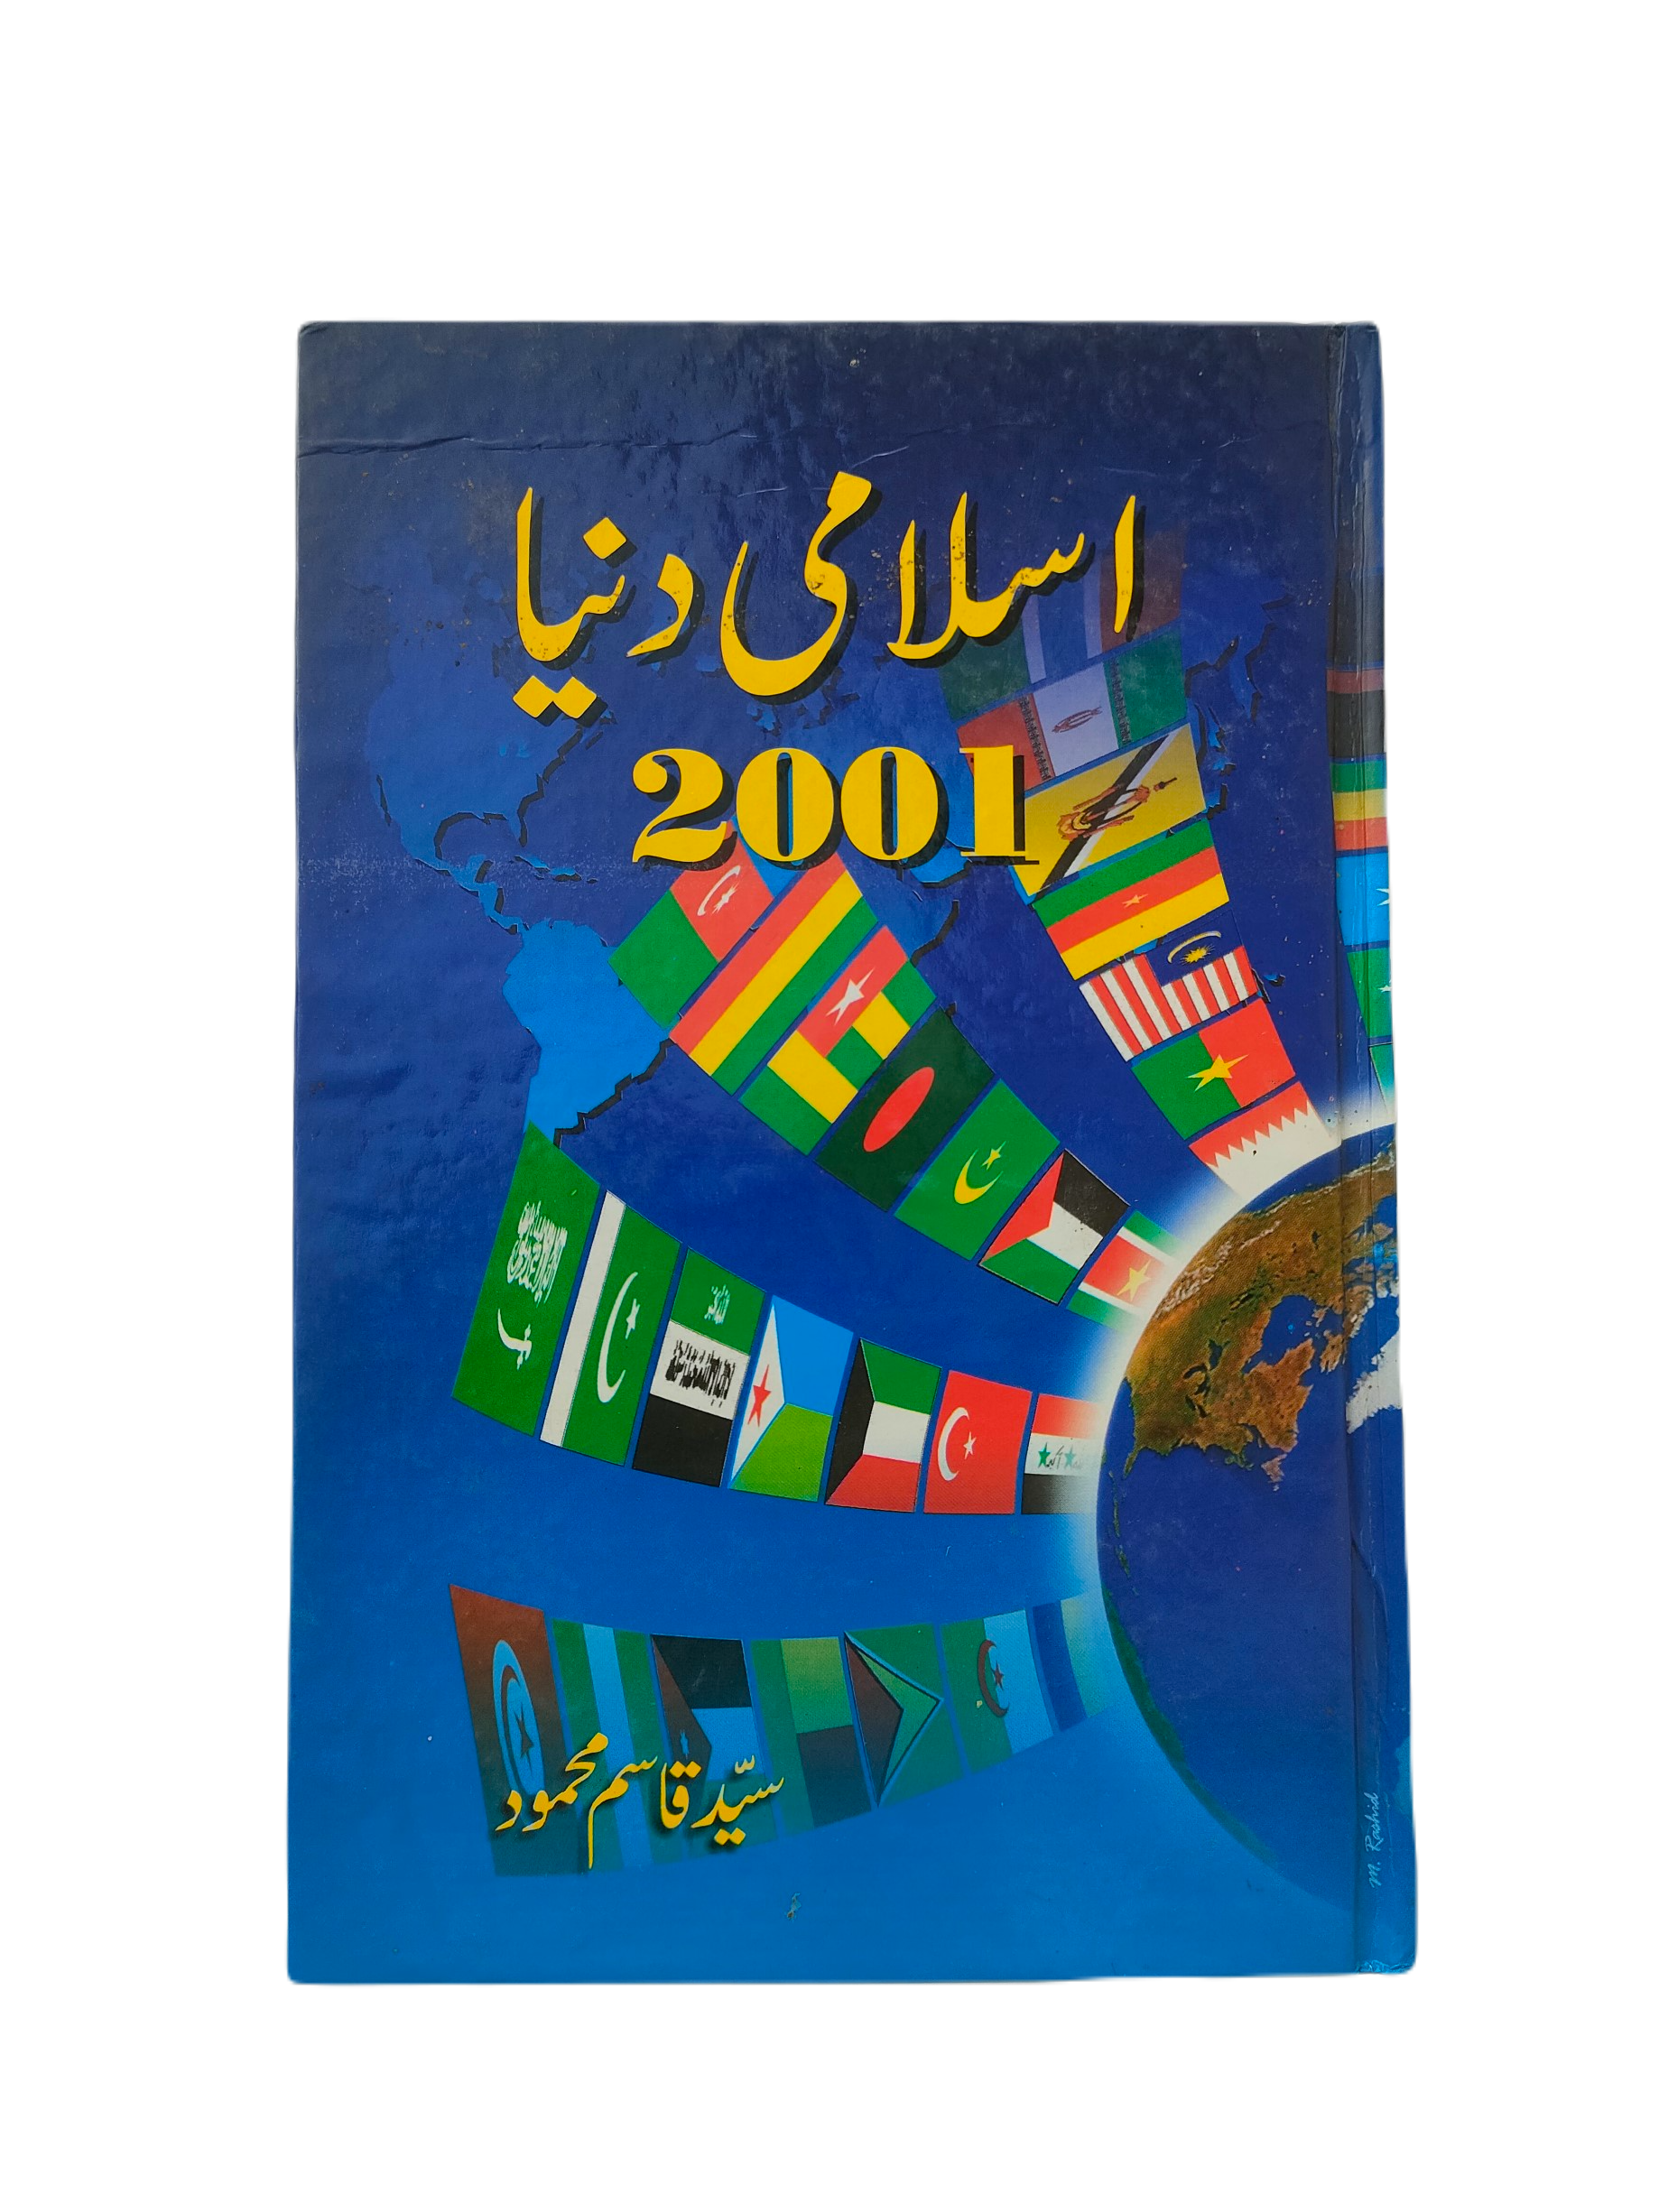 Islami Dunia 2001 (Islamic World 2001)